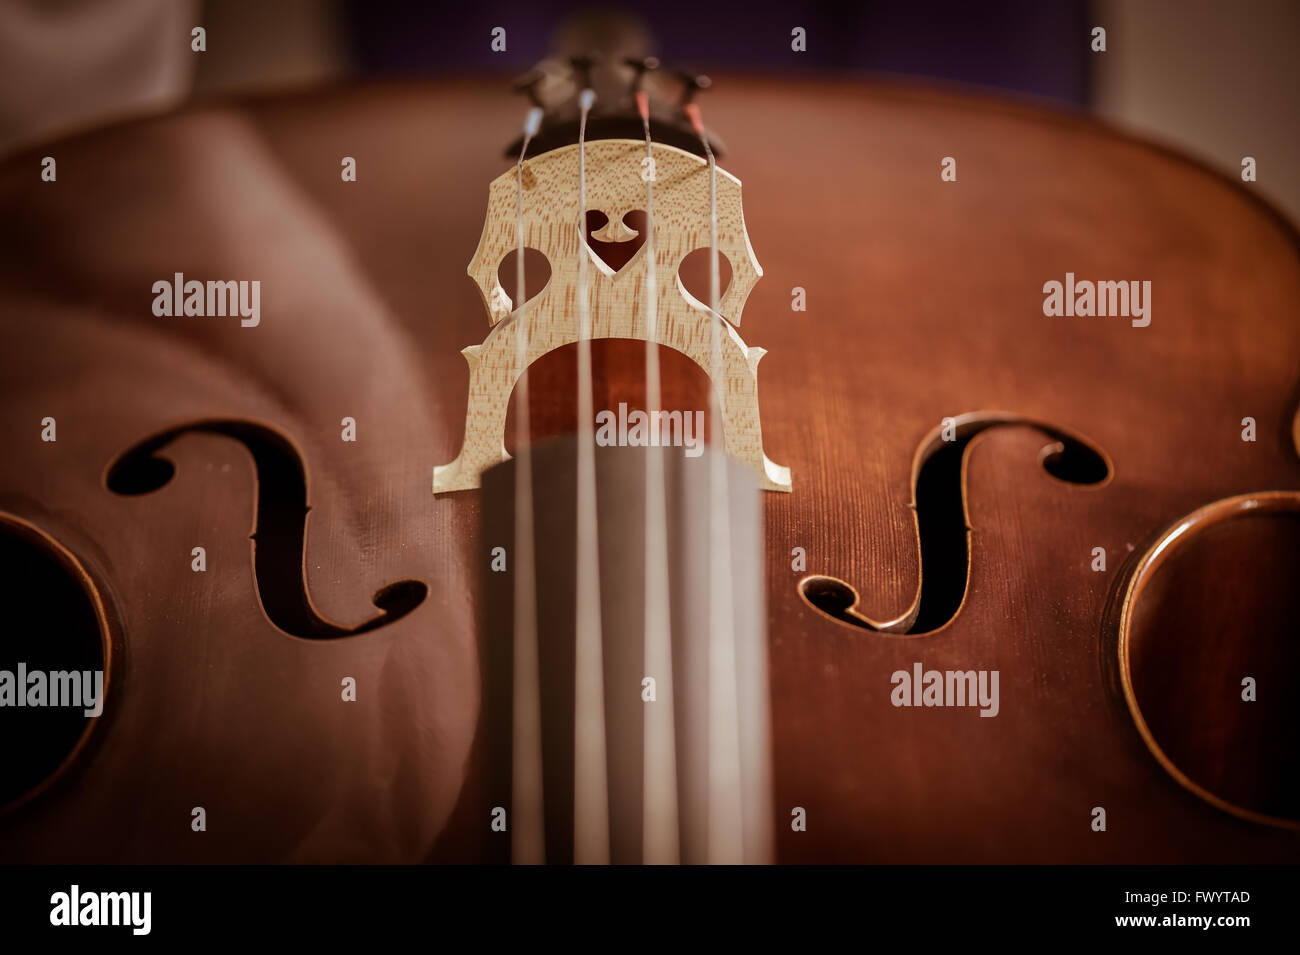 Cello strings closeup -Fotos und -Bildmaterial in hoher Auflösung – Alamy